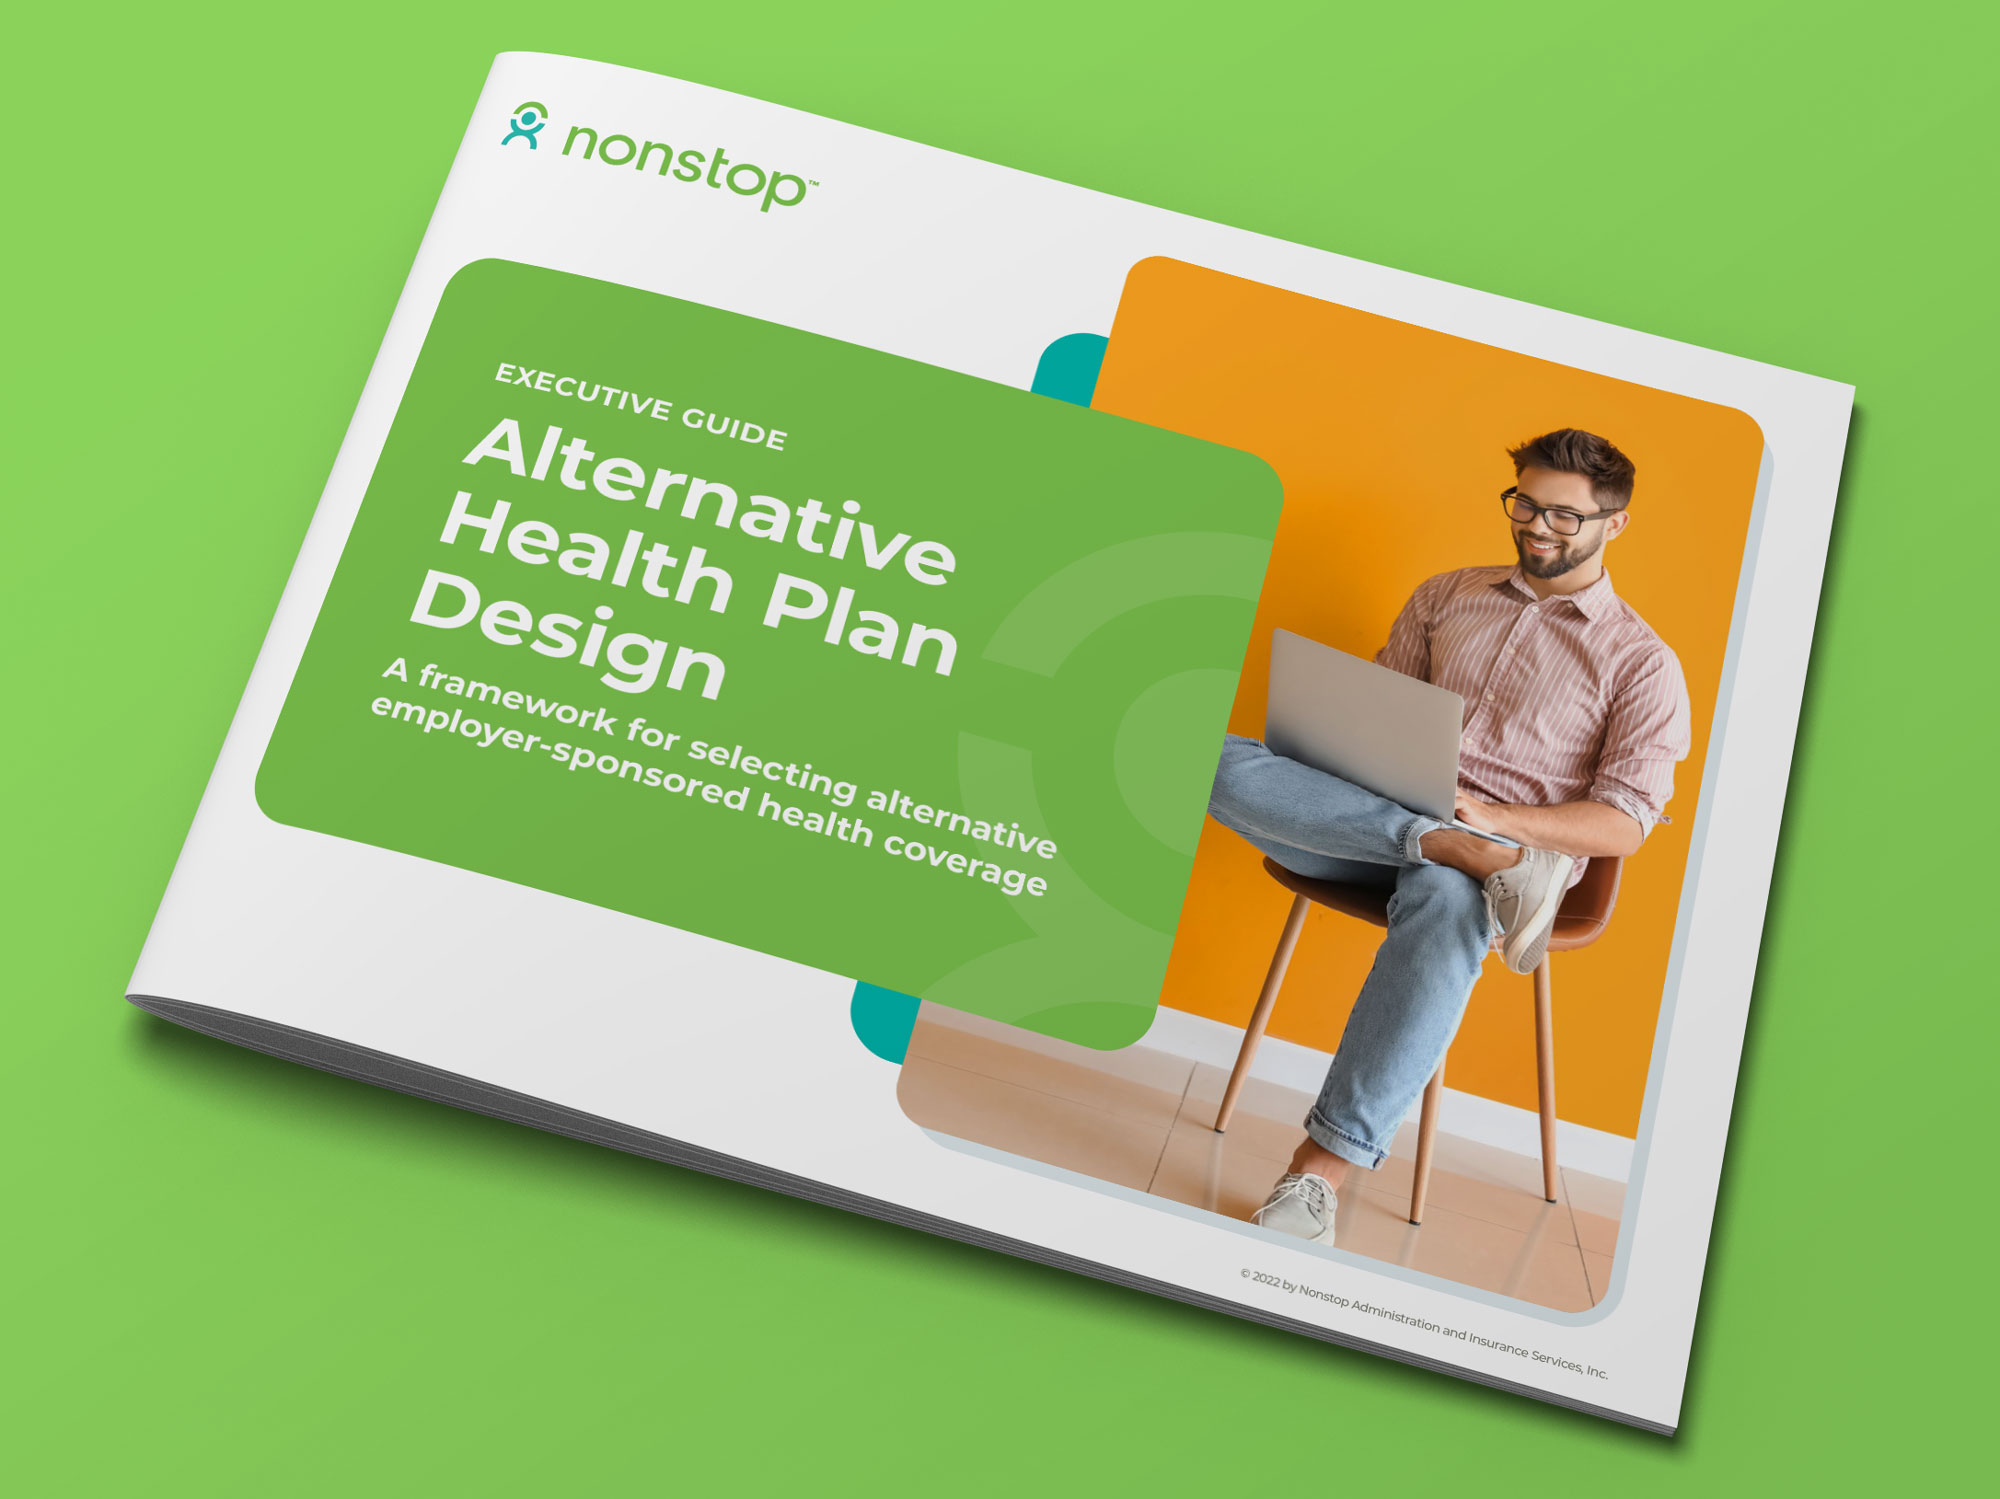 Alternative Health Plan Design: A Framework for Selecting Alternative Employer-Sponsored Health Coverage